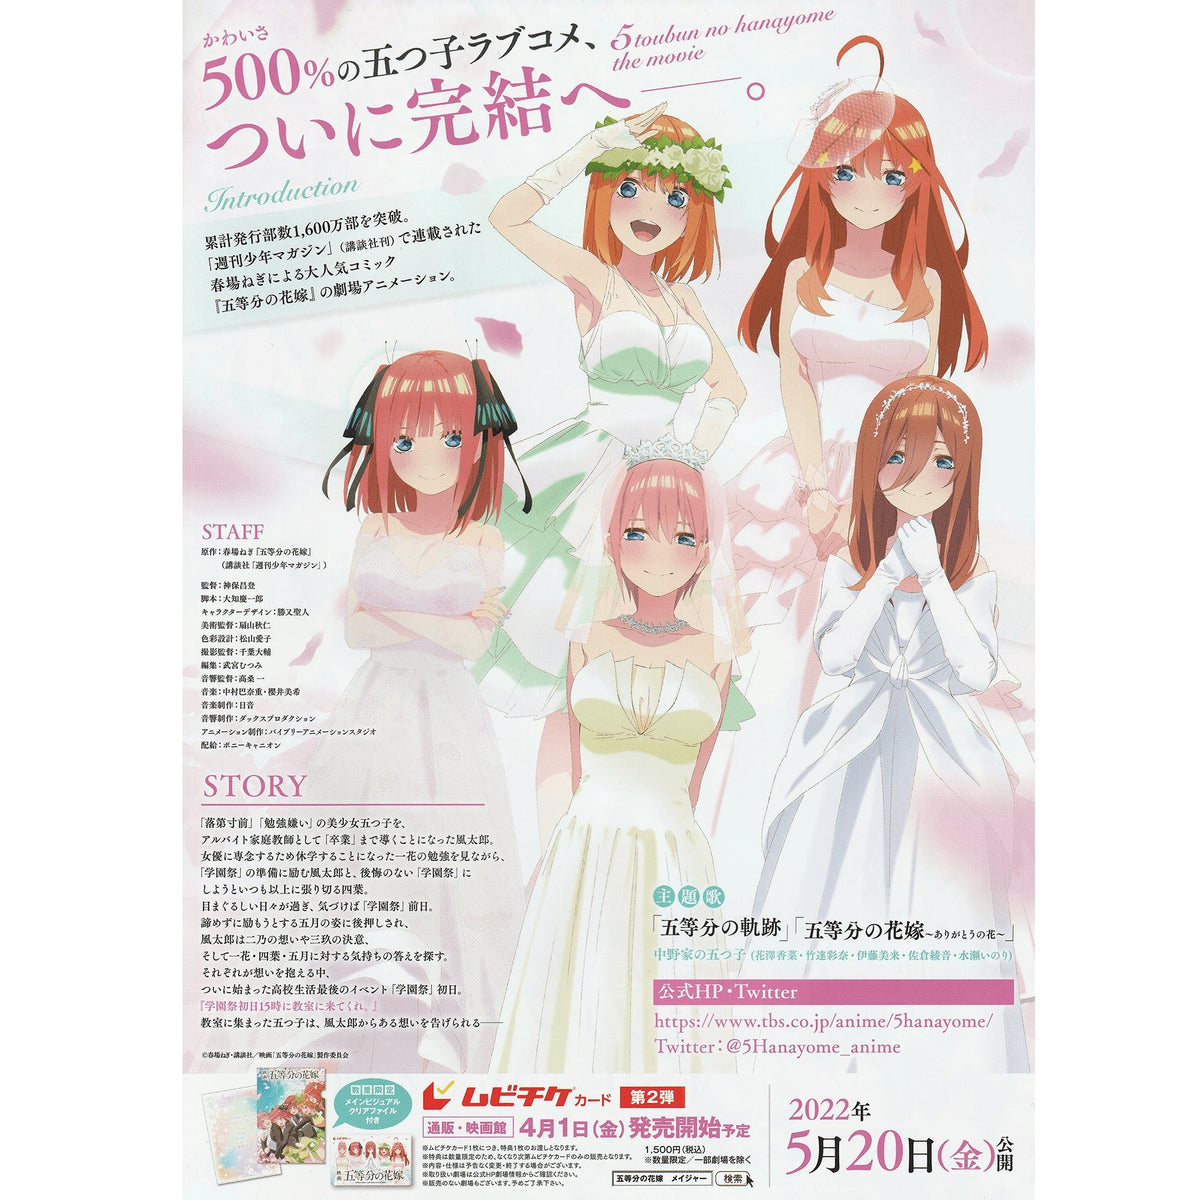 Japanese Chirashi B5 Mini Anime Movie Poster 5 Hanayome The Quintessential Quintuplets - Sugoi JDM